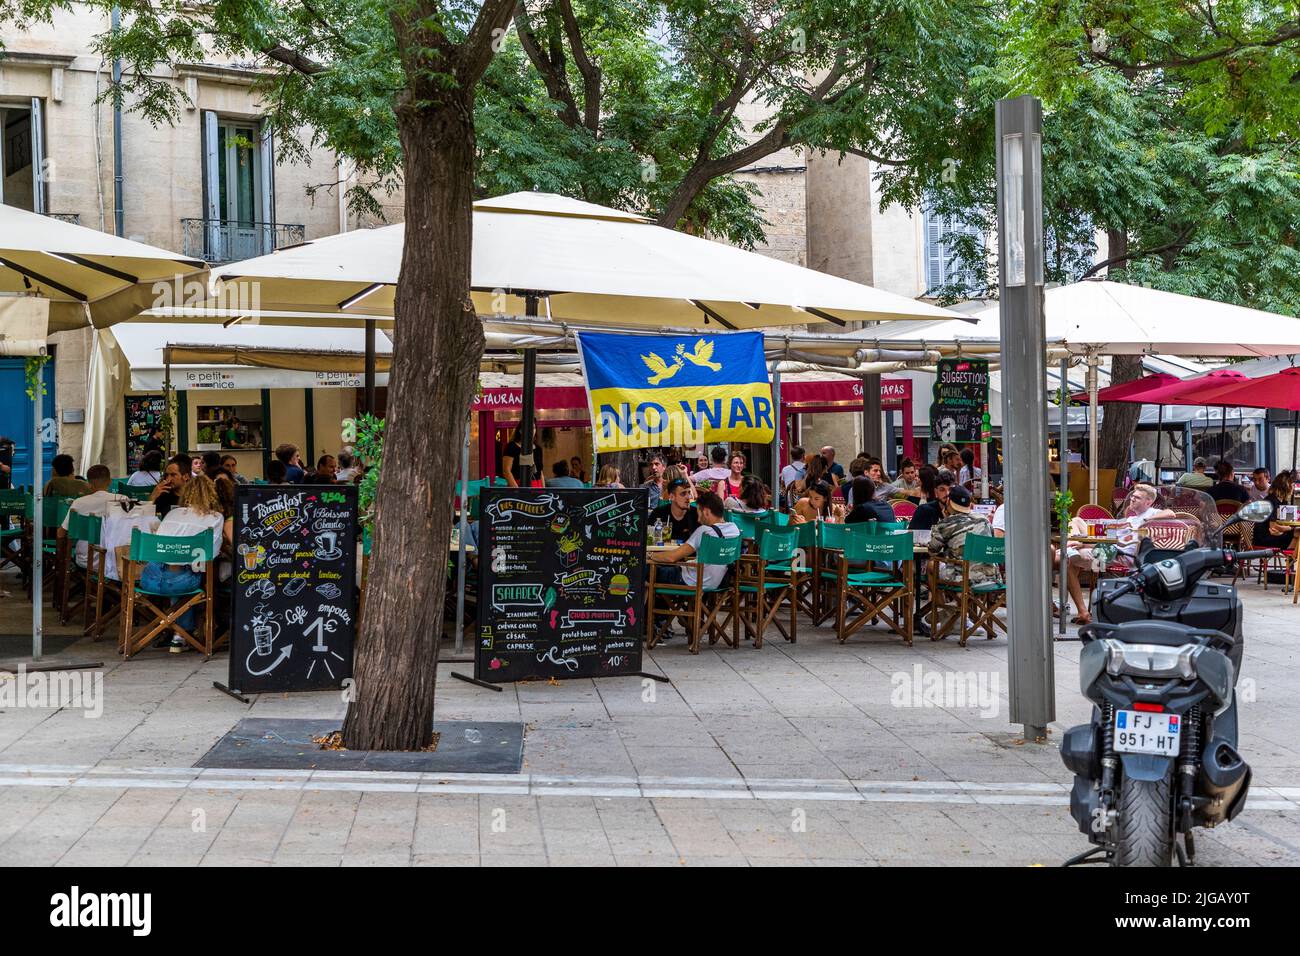 Ukrainian flag in a Montpellier street cafe warns: No war Stock Photo